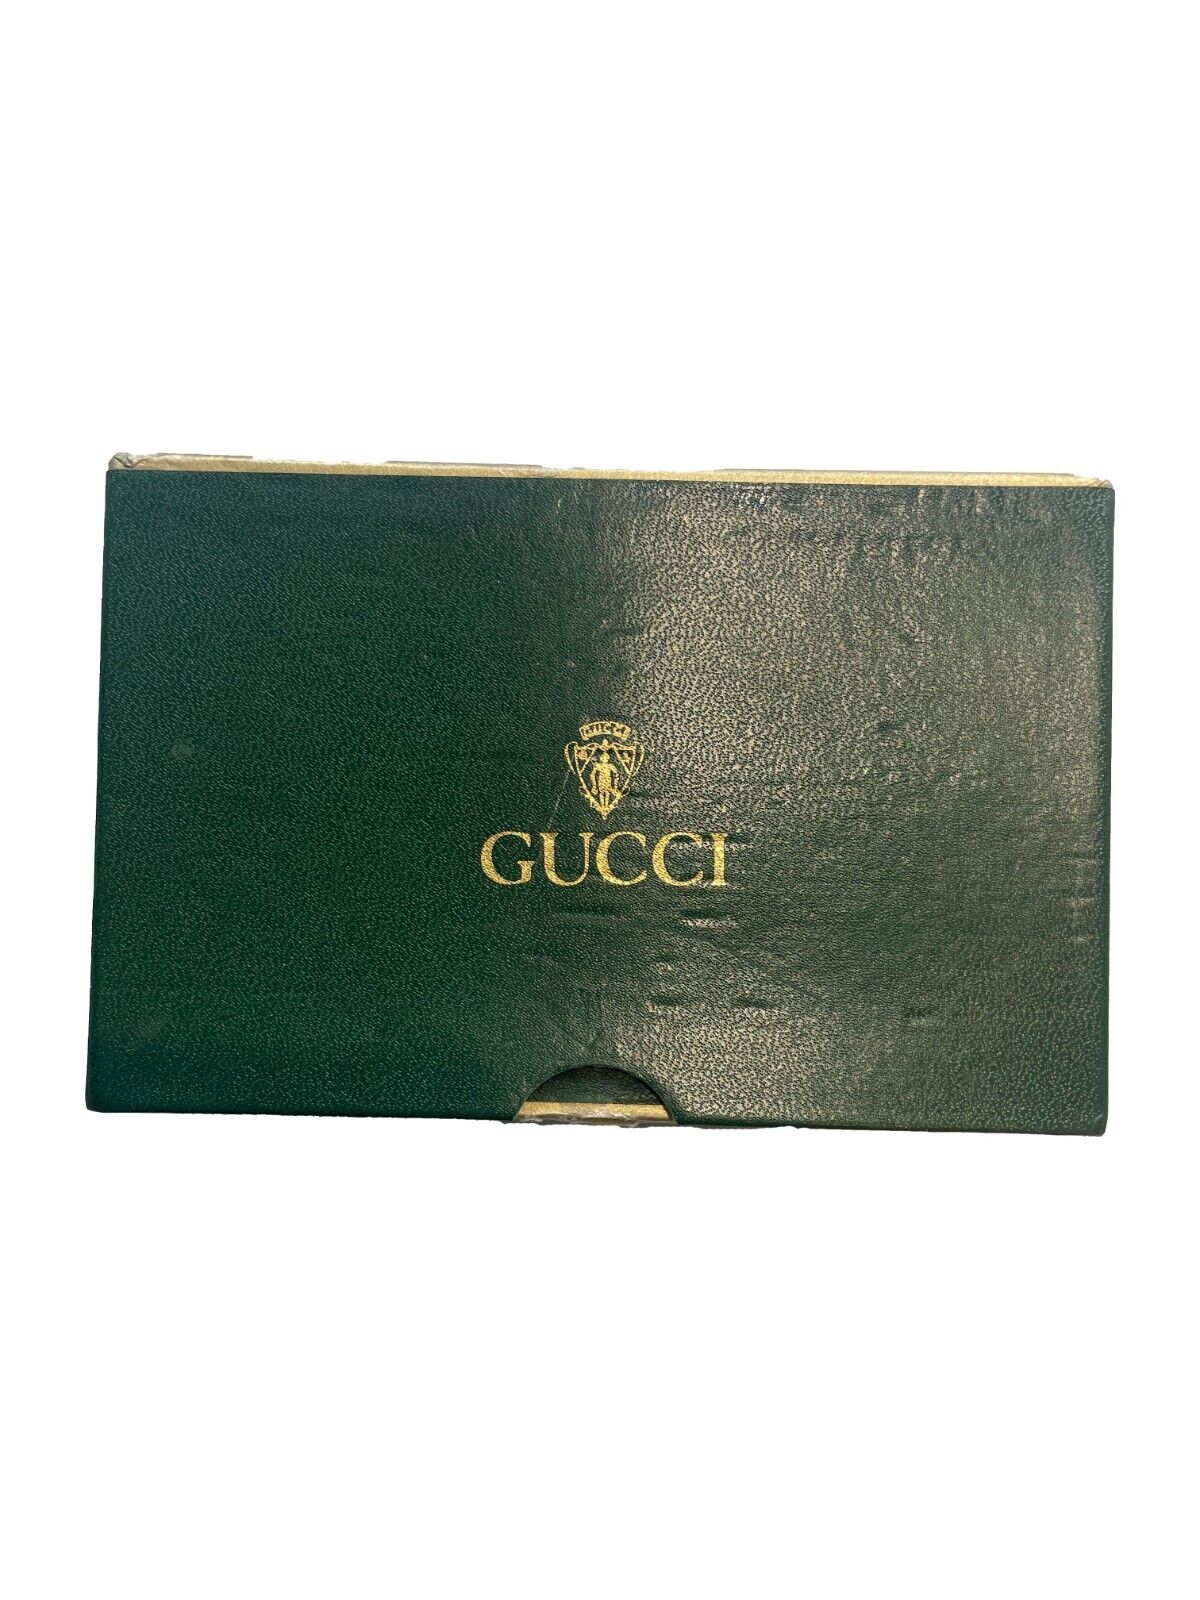 Authentic Vintage Gucci Playing Cards Trump Set 2 Decks 1 unused item